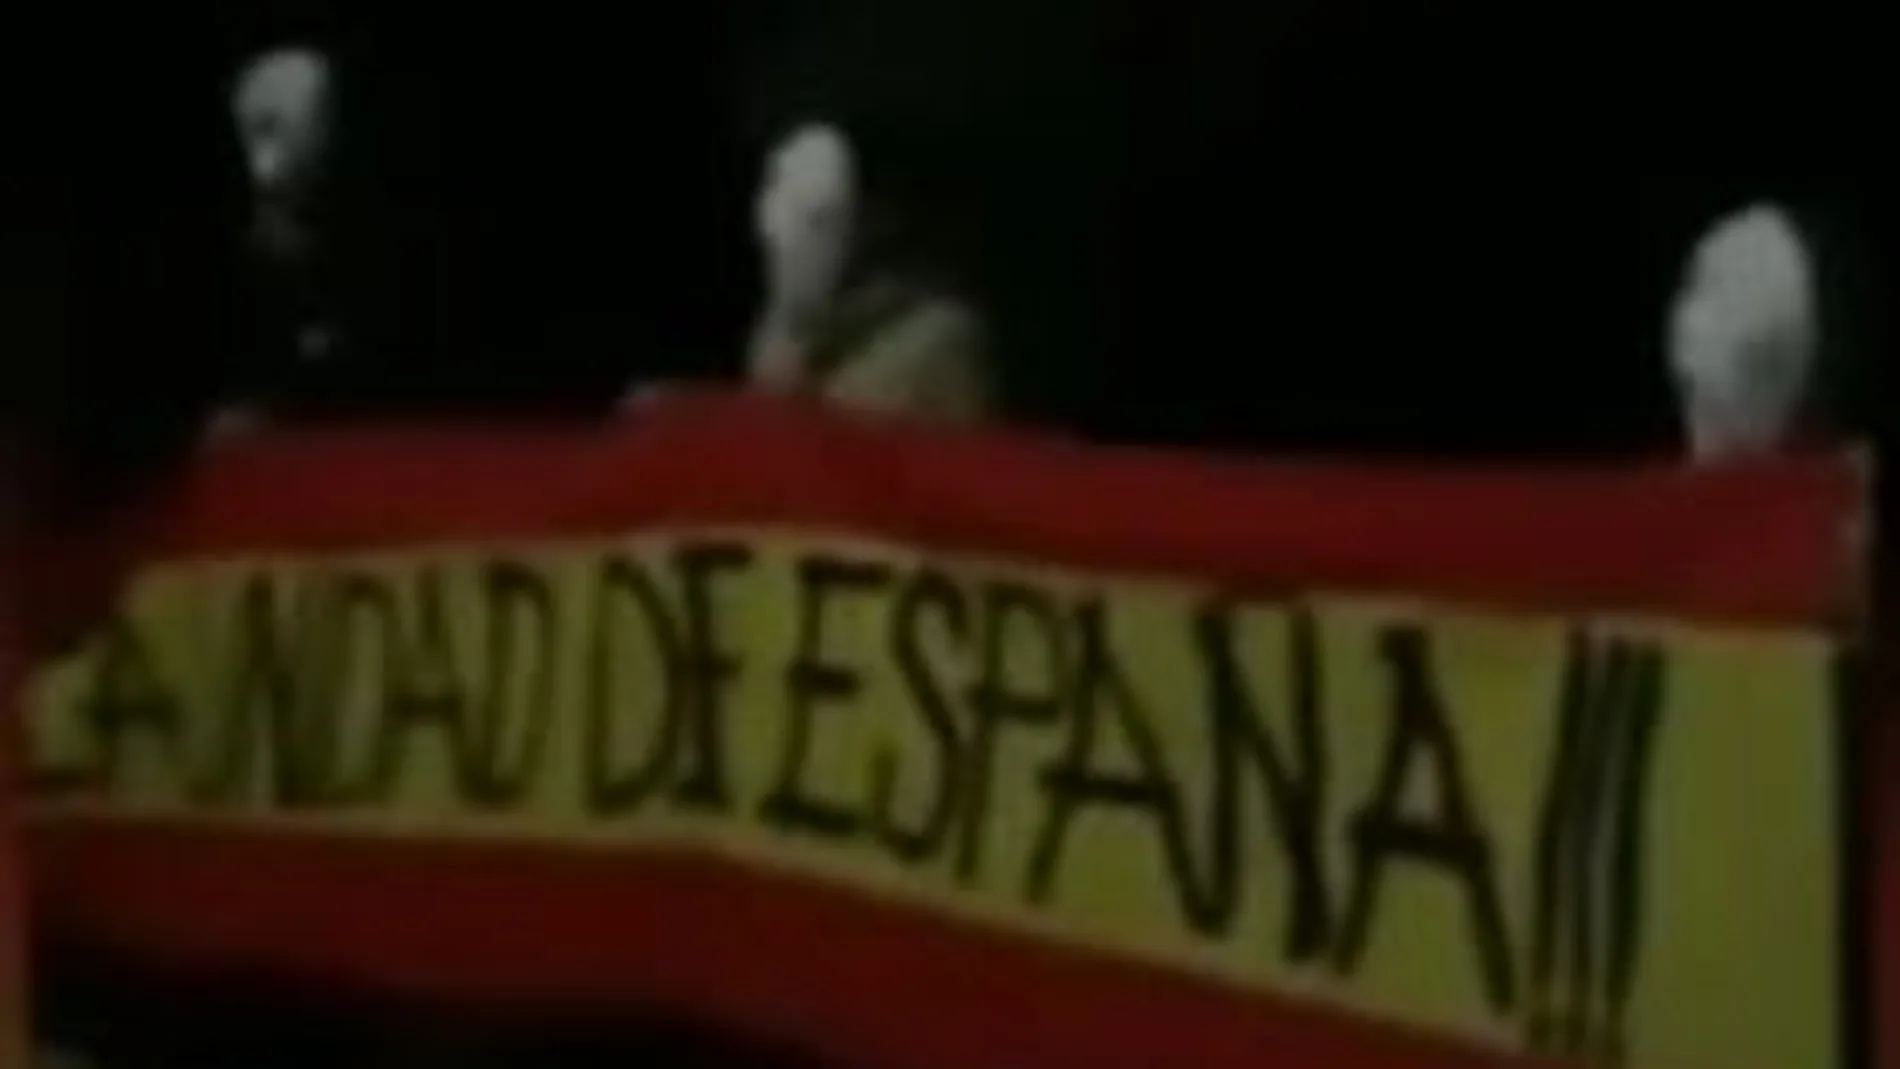 Captura del vídeo que emitieron en directo el grupo de ultraderecha que hizo un escrache a Mónica Oltra